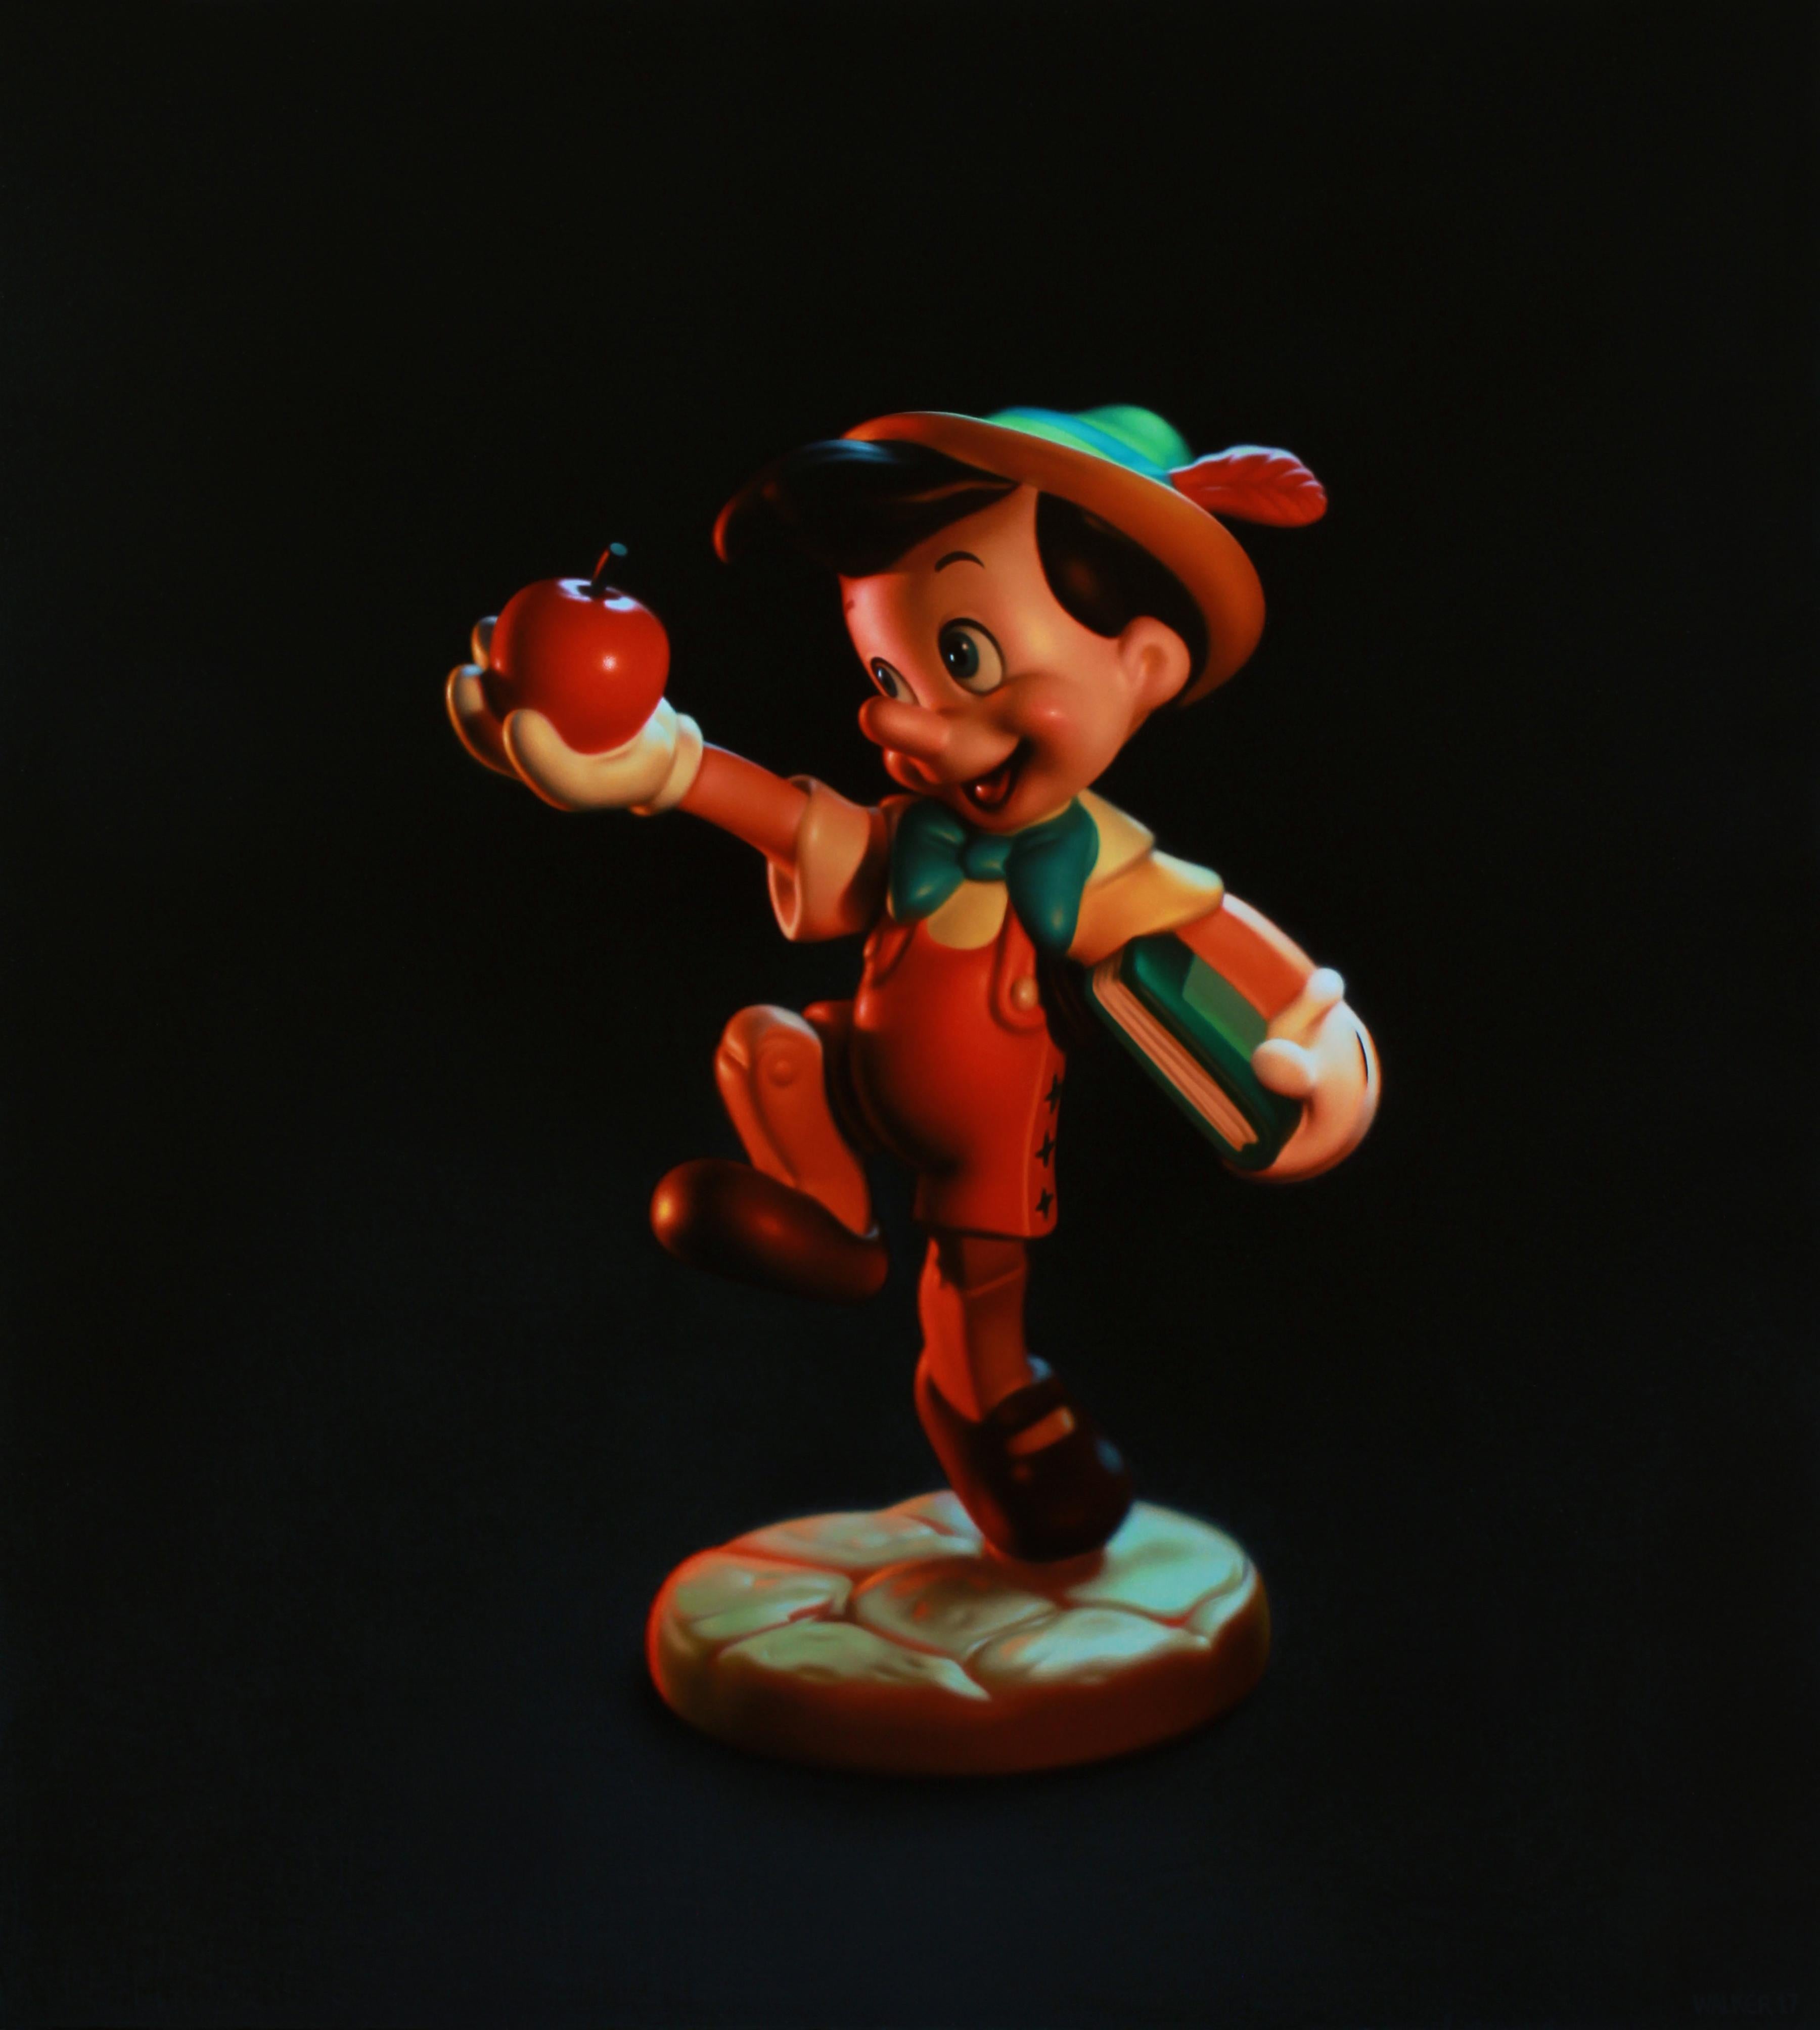 Jason Walker Figurative Painting - "Pinocchio", Oil Painting